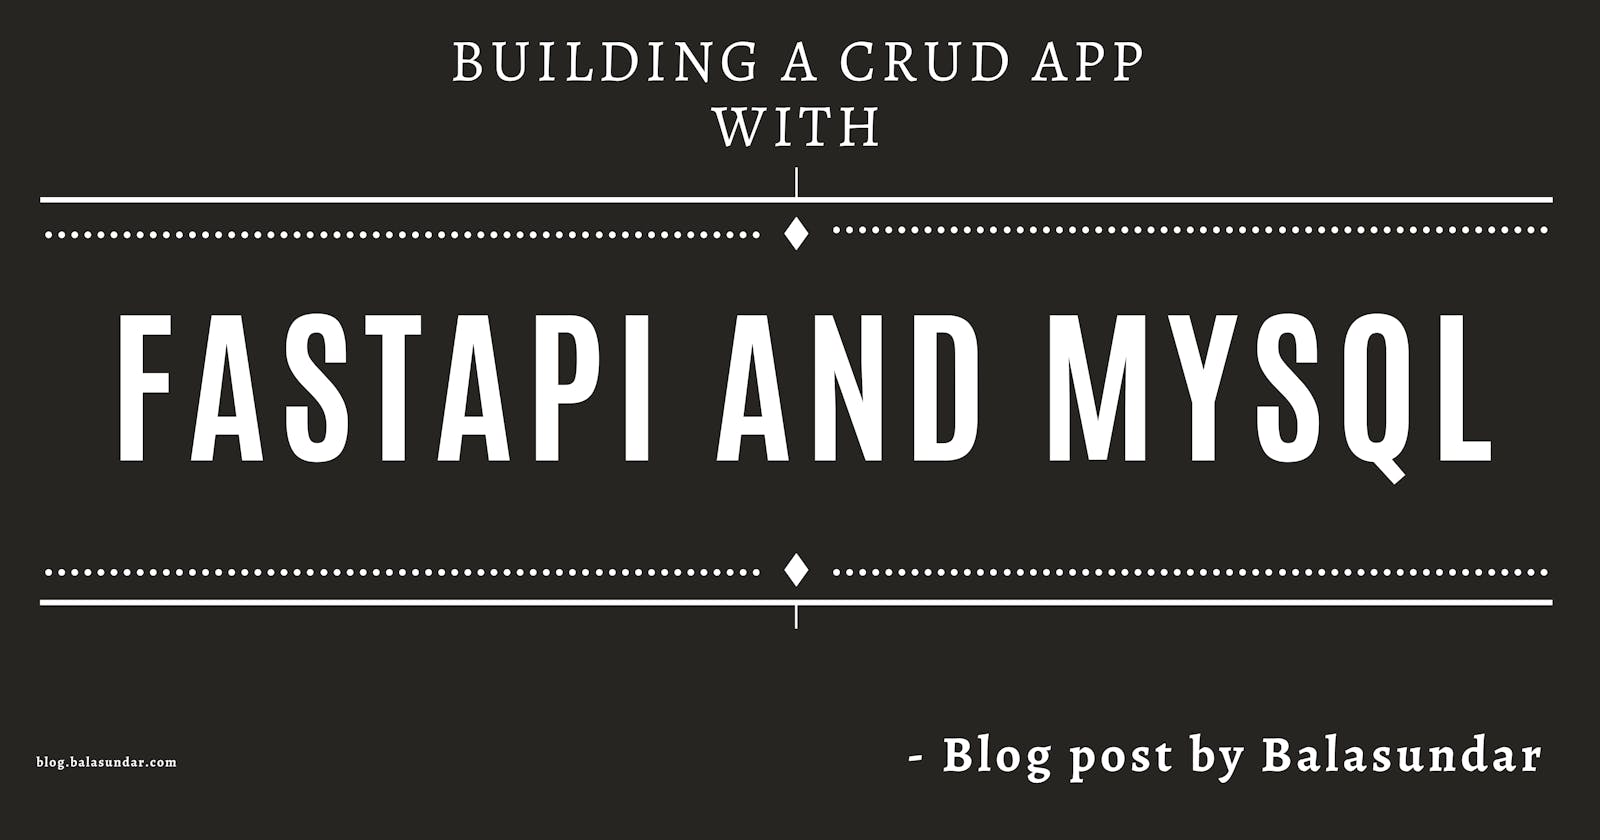 Building a CRUD APP with FastAPI and MySQL